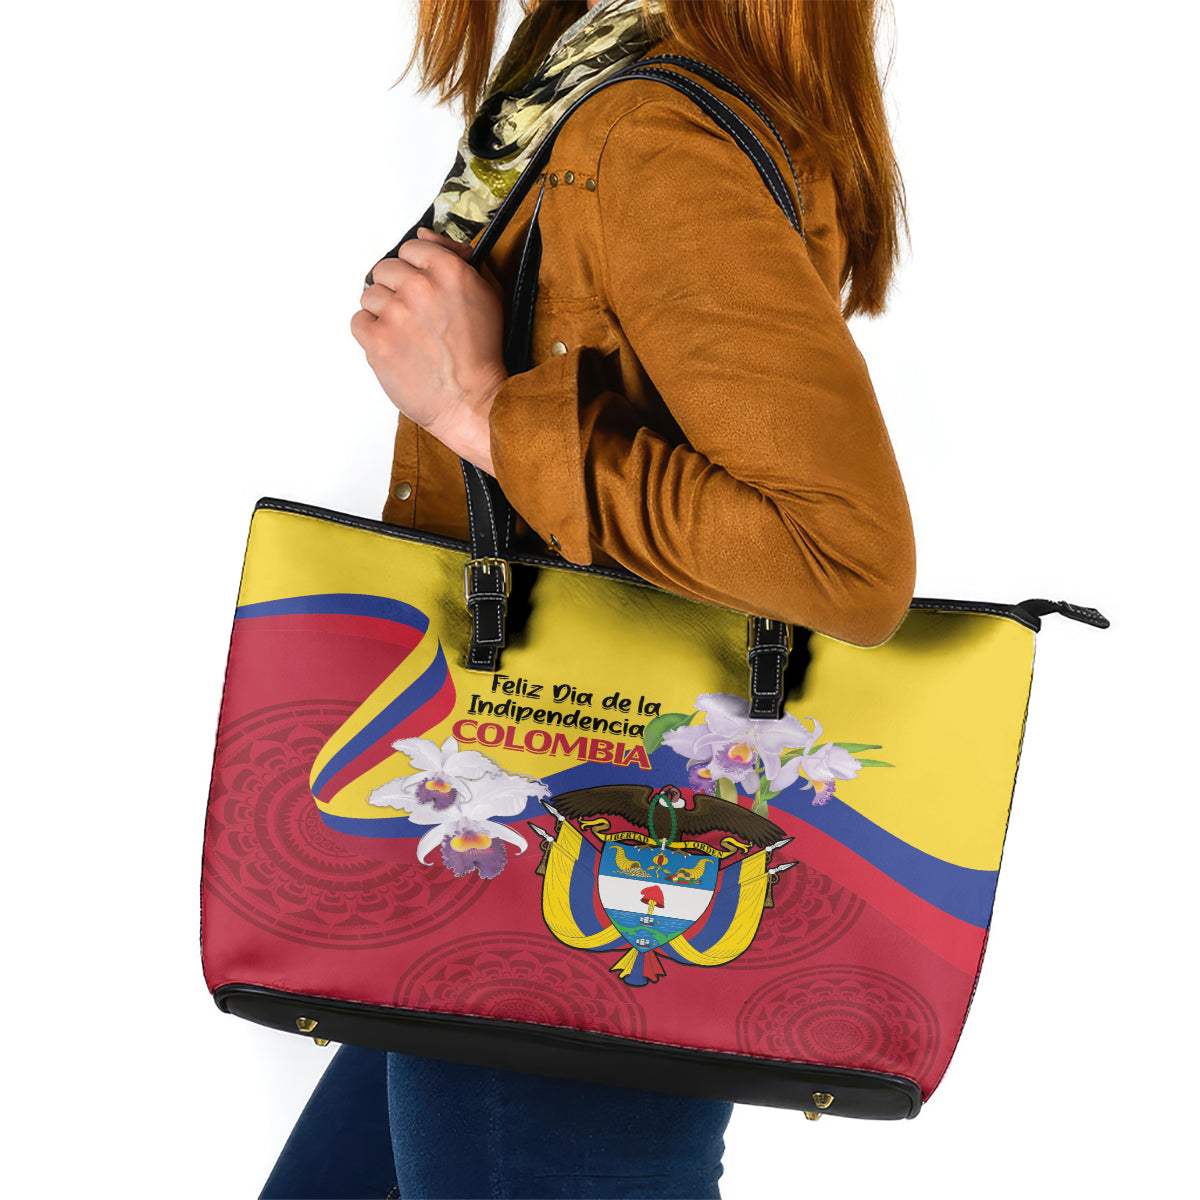 Colombia Independence Day Leather Tote Bag Feliz Dia de la Independencia